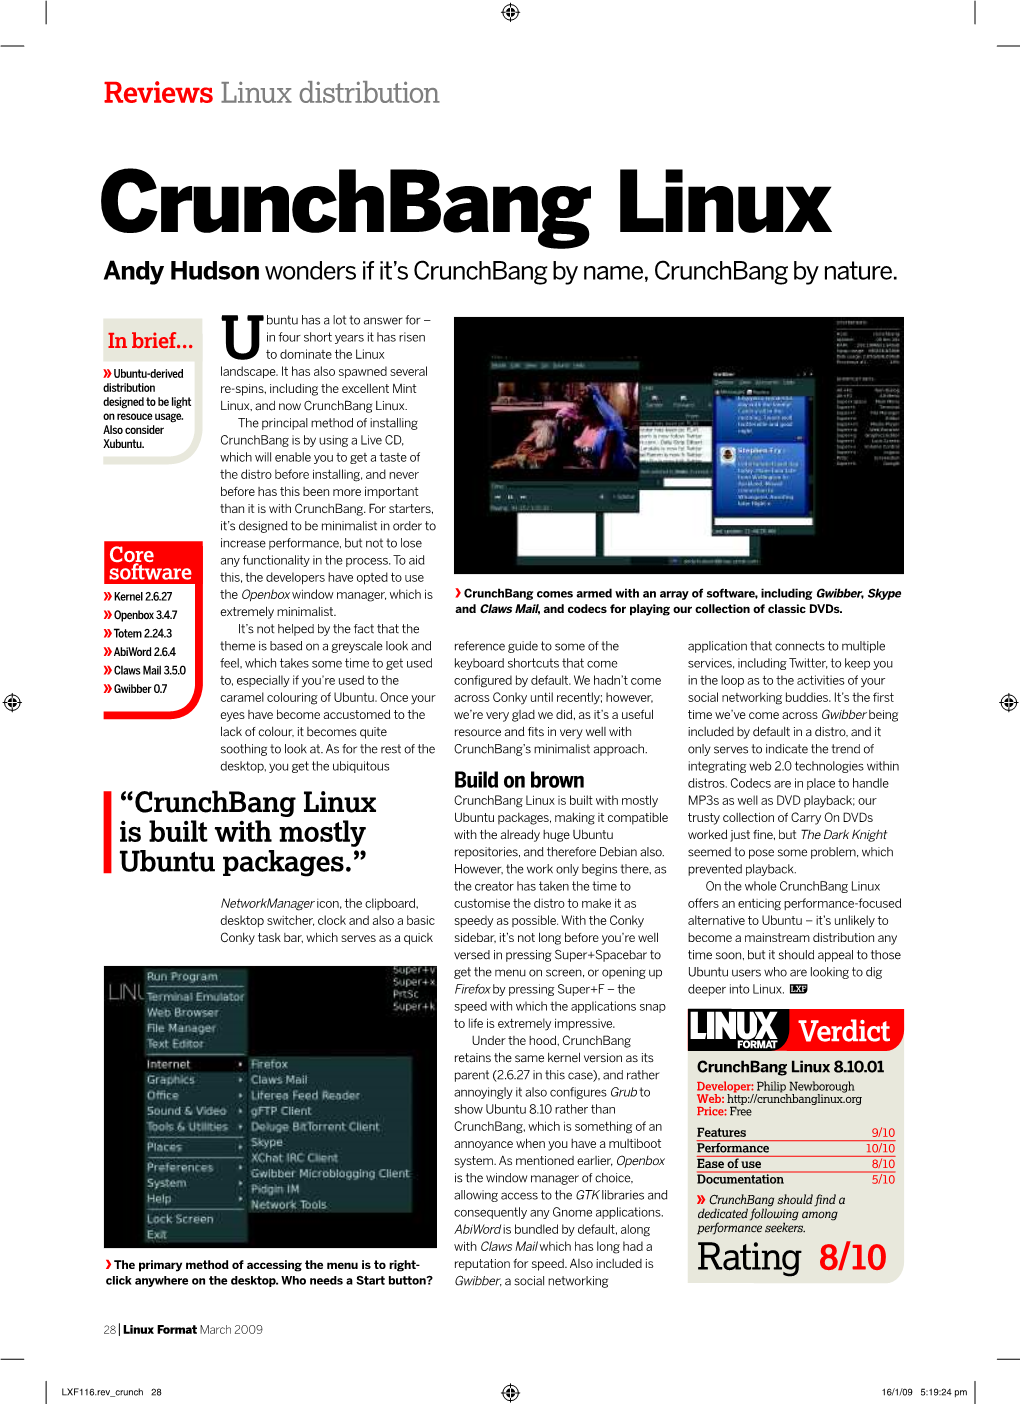 Crunchbang Linux Andy Hudson Wonders If It’S Crunchbang by Name, Crunchbang by Nature